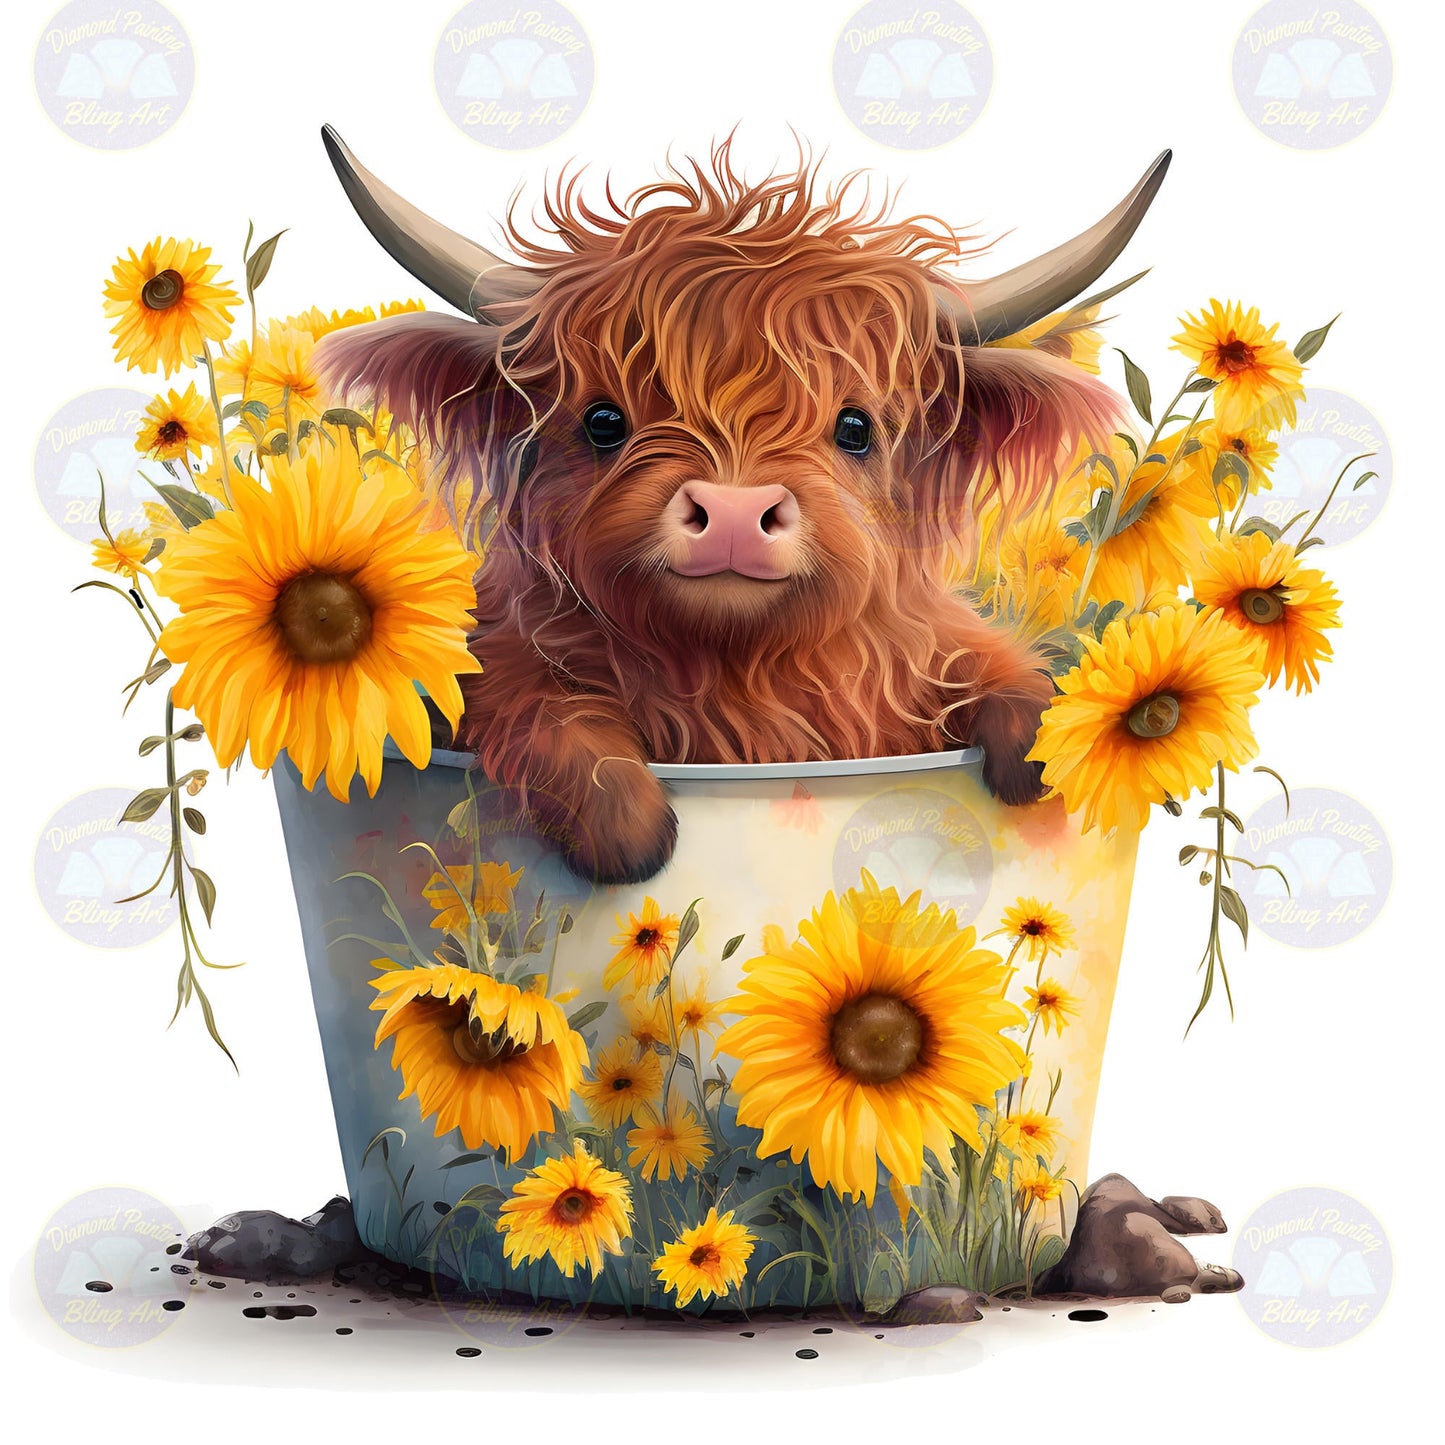 Baby Highland Cow with Sunflowers - Diamond Art kit